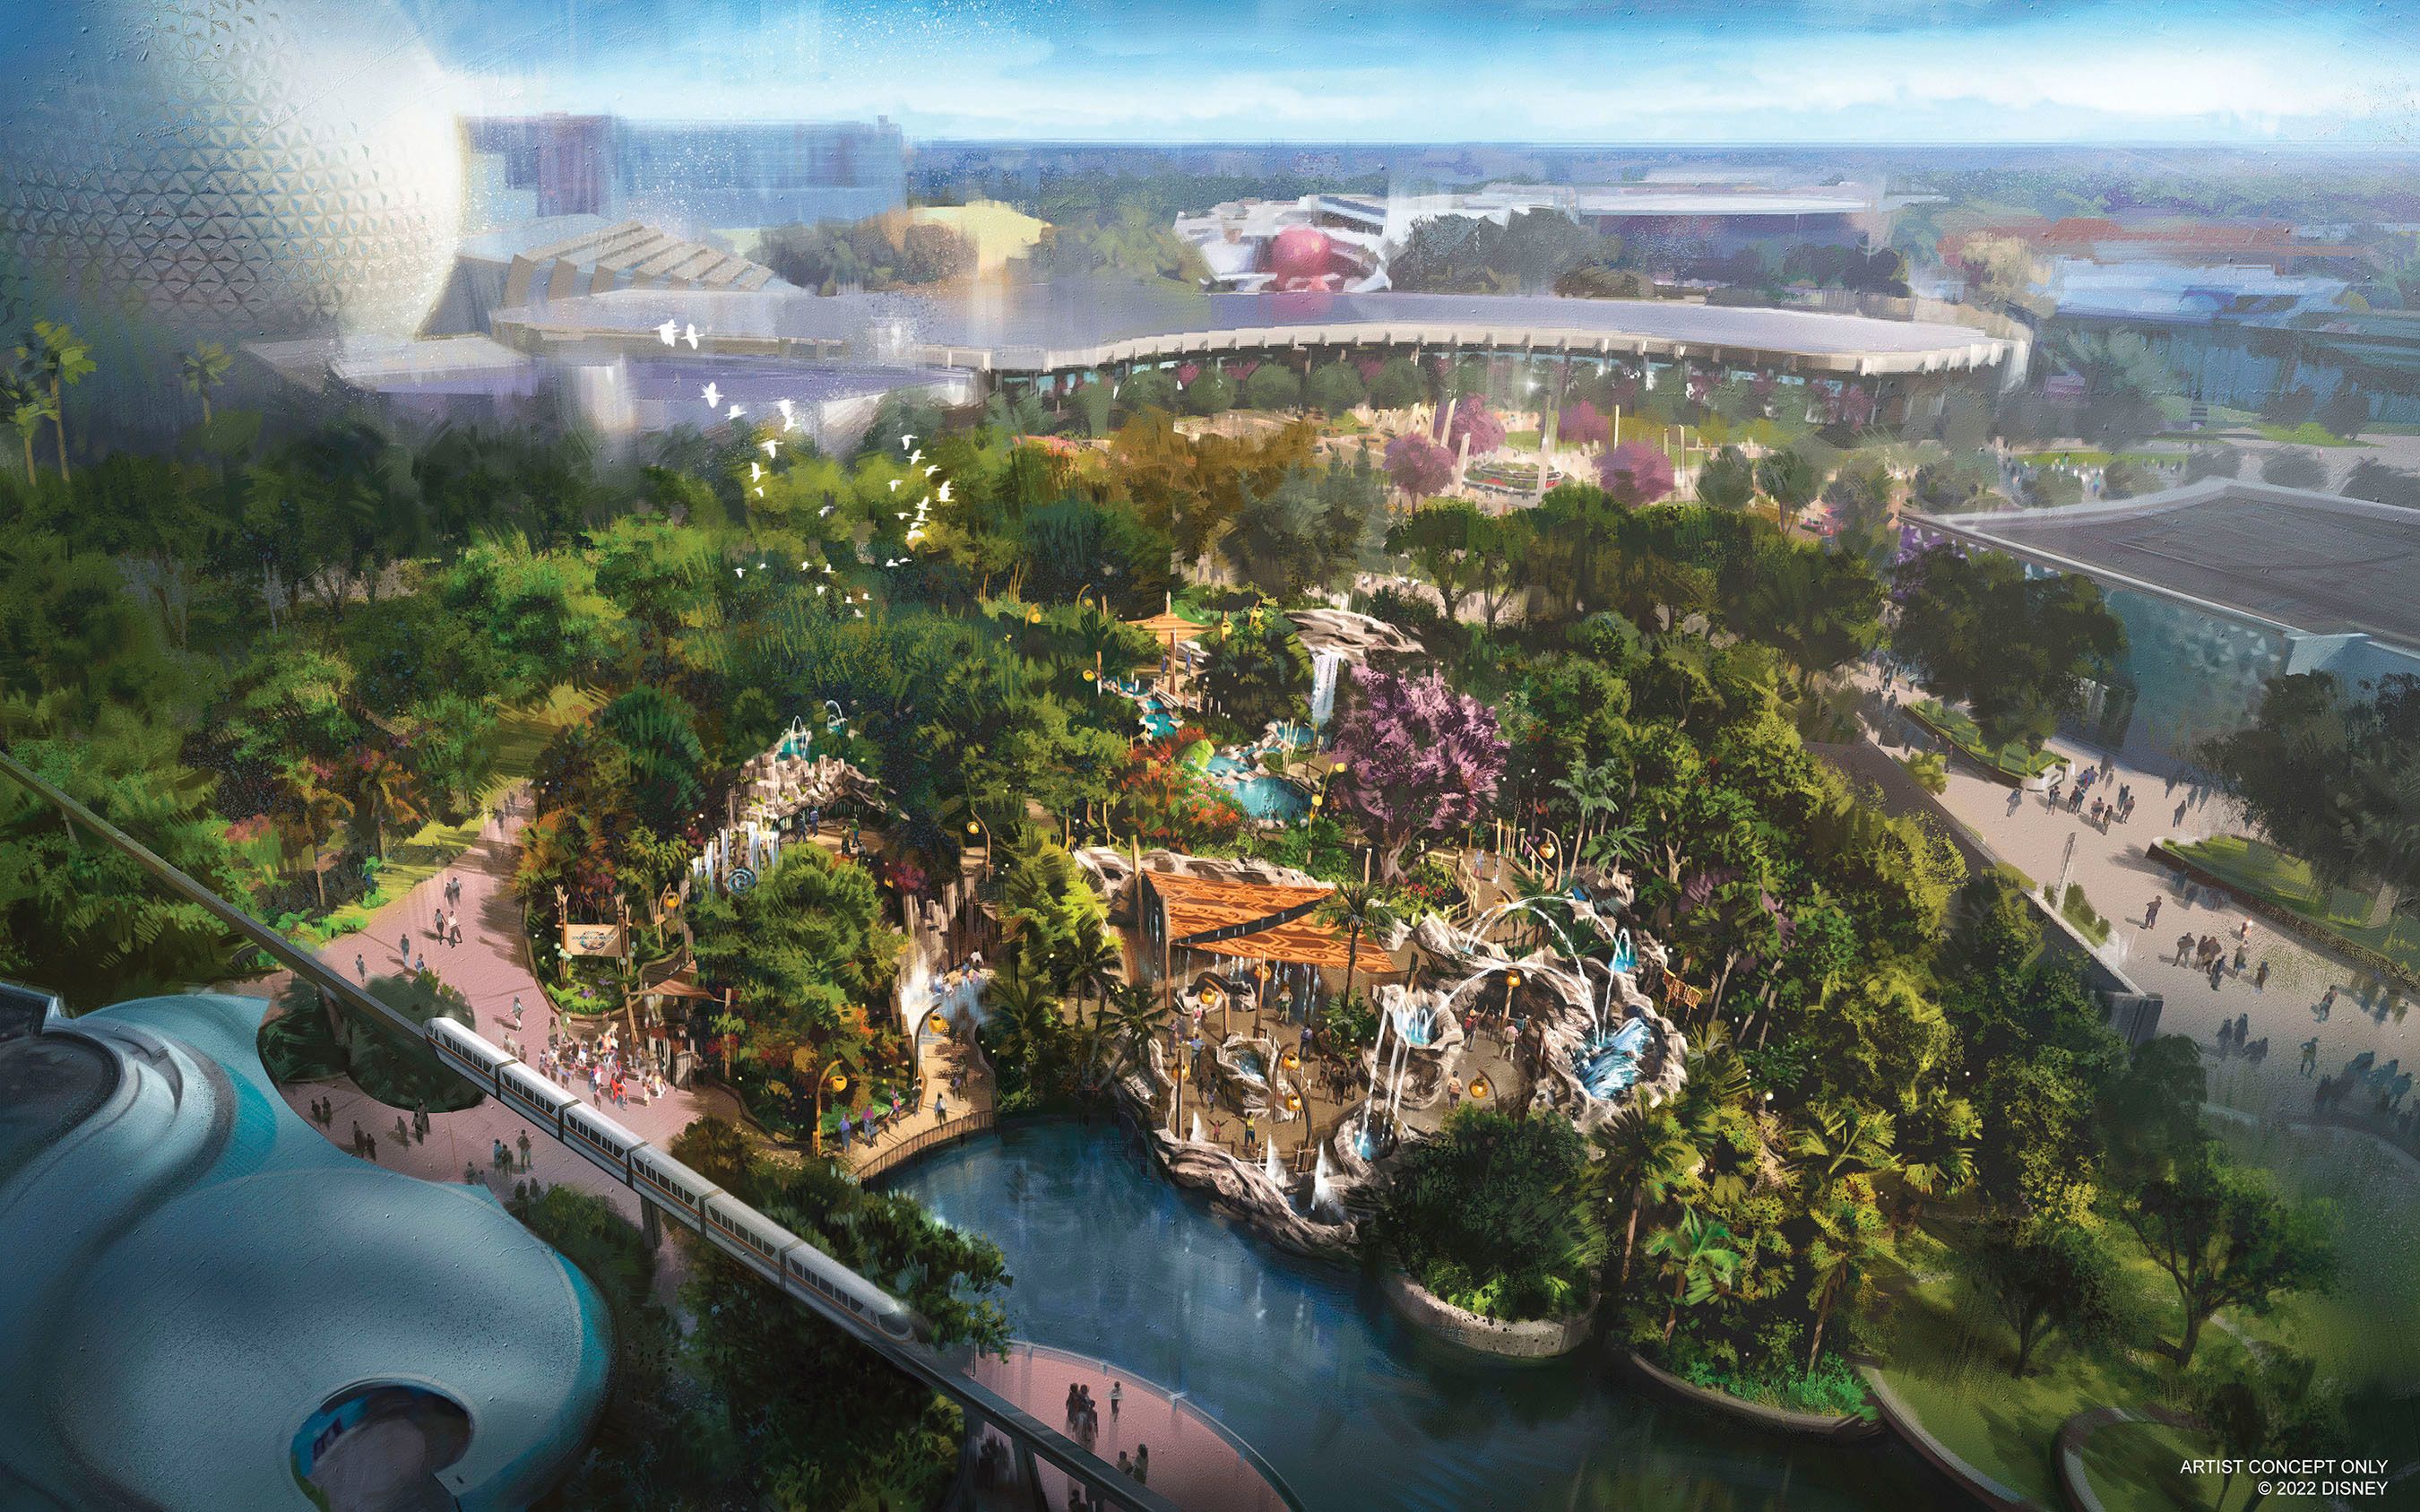 Florida, Disney dominates the international list of popular amusement parks